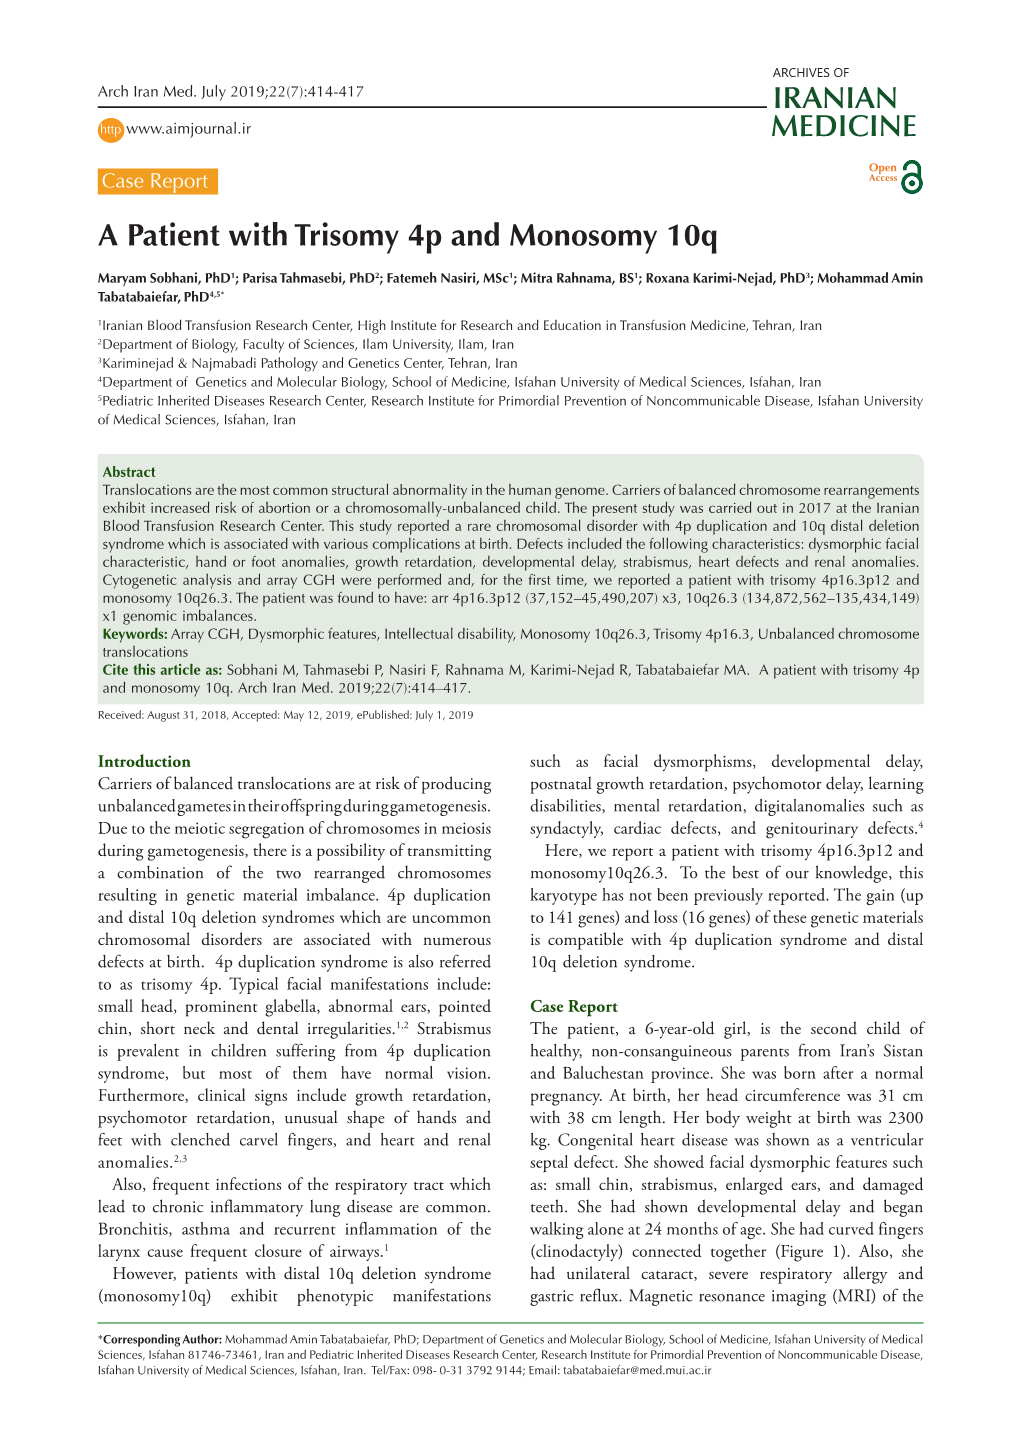 A Patient with Trisomy 4P and Monosomy 10Q